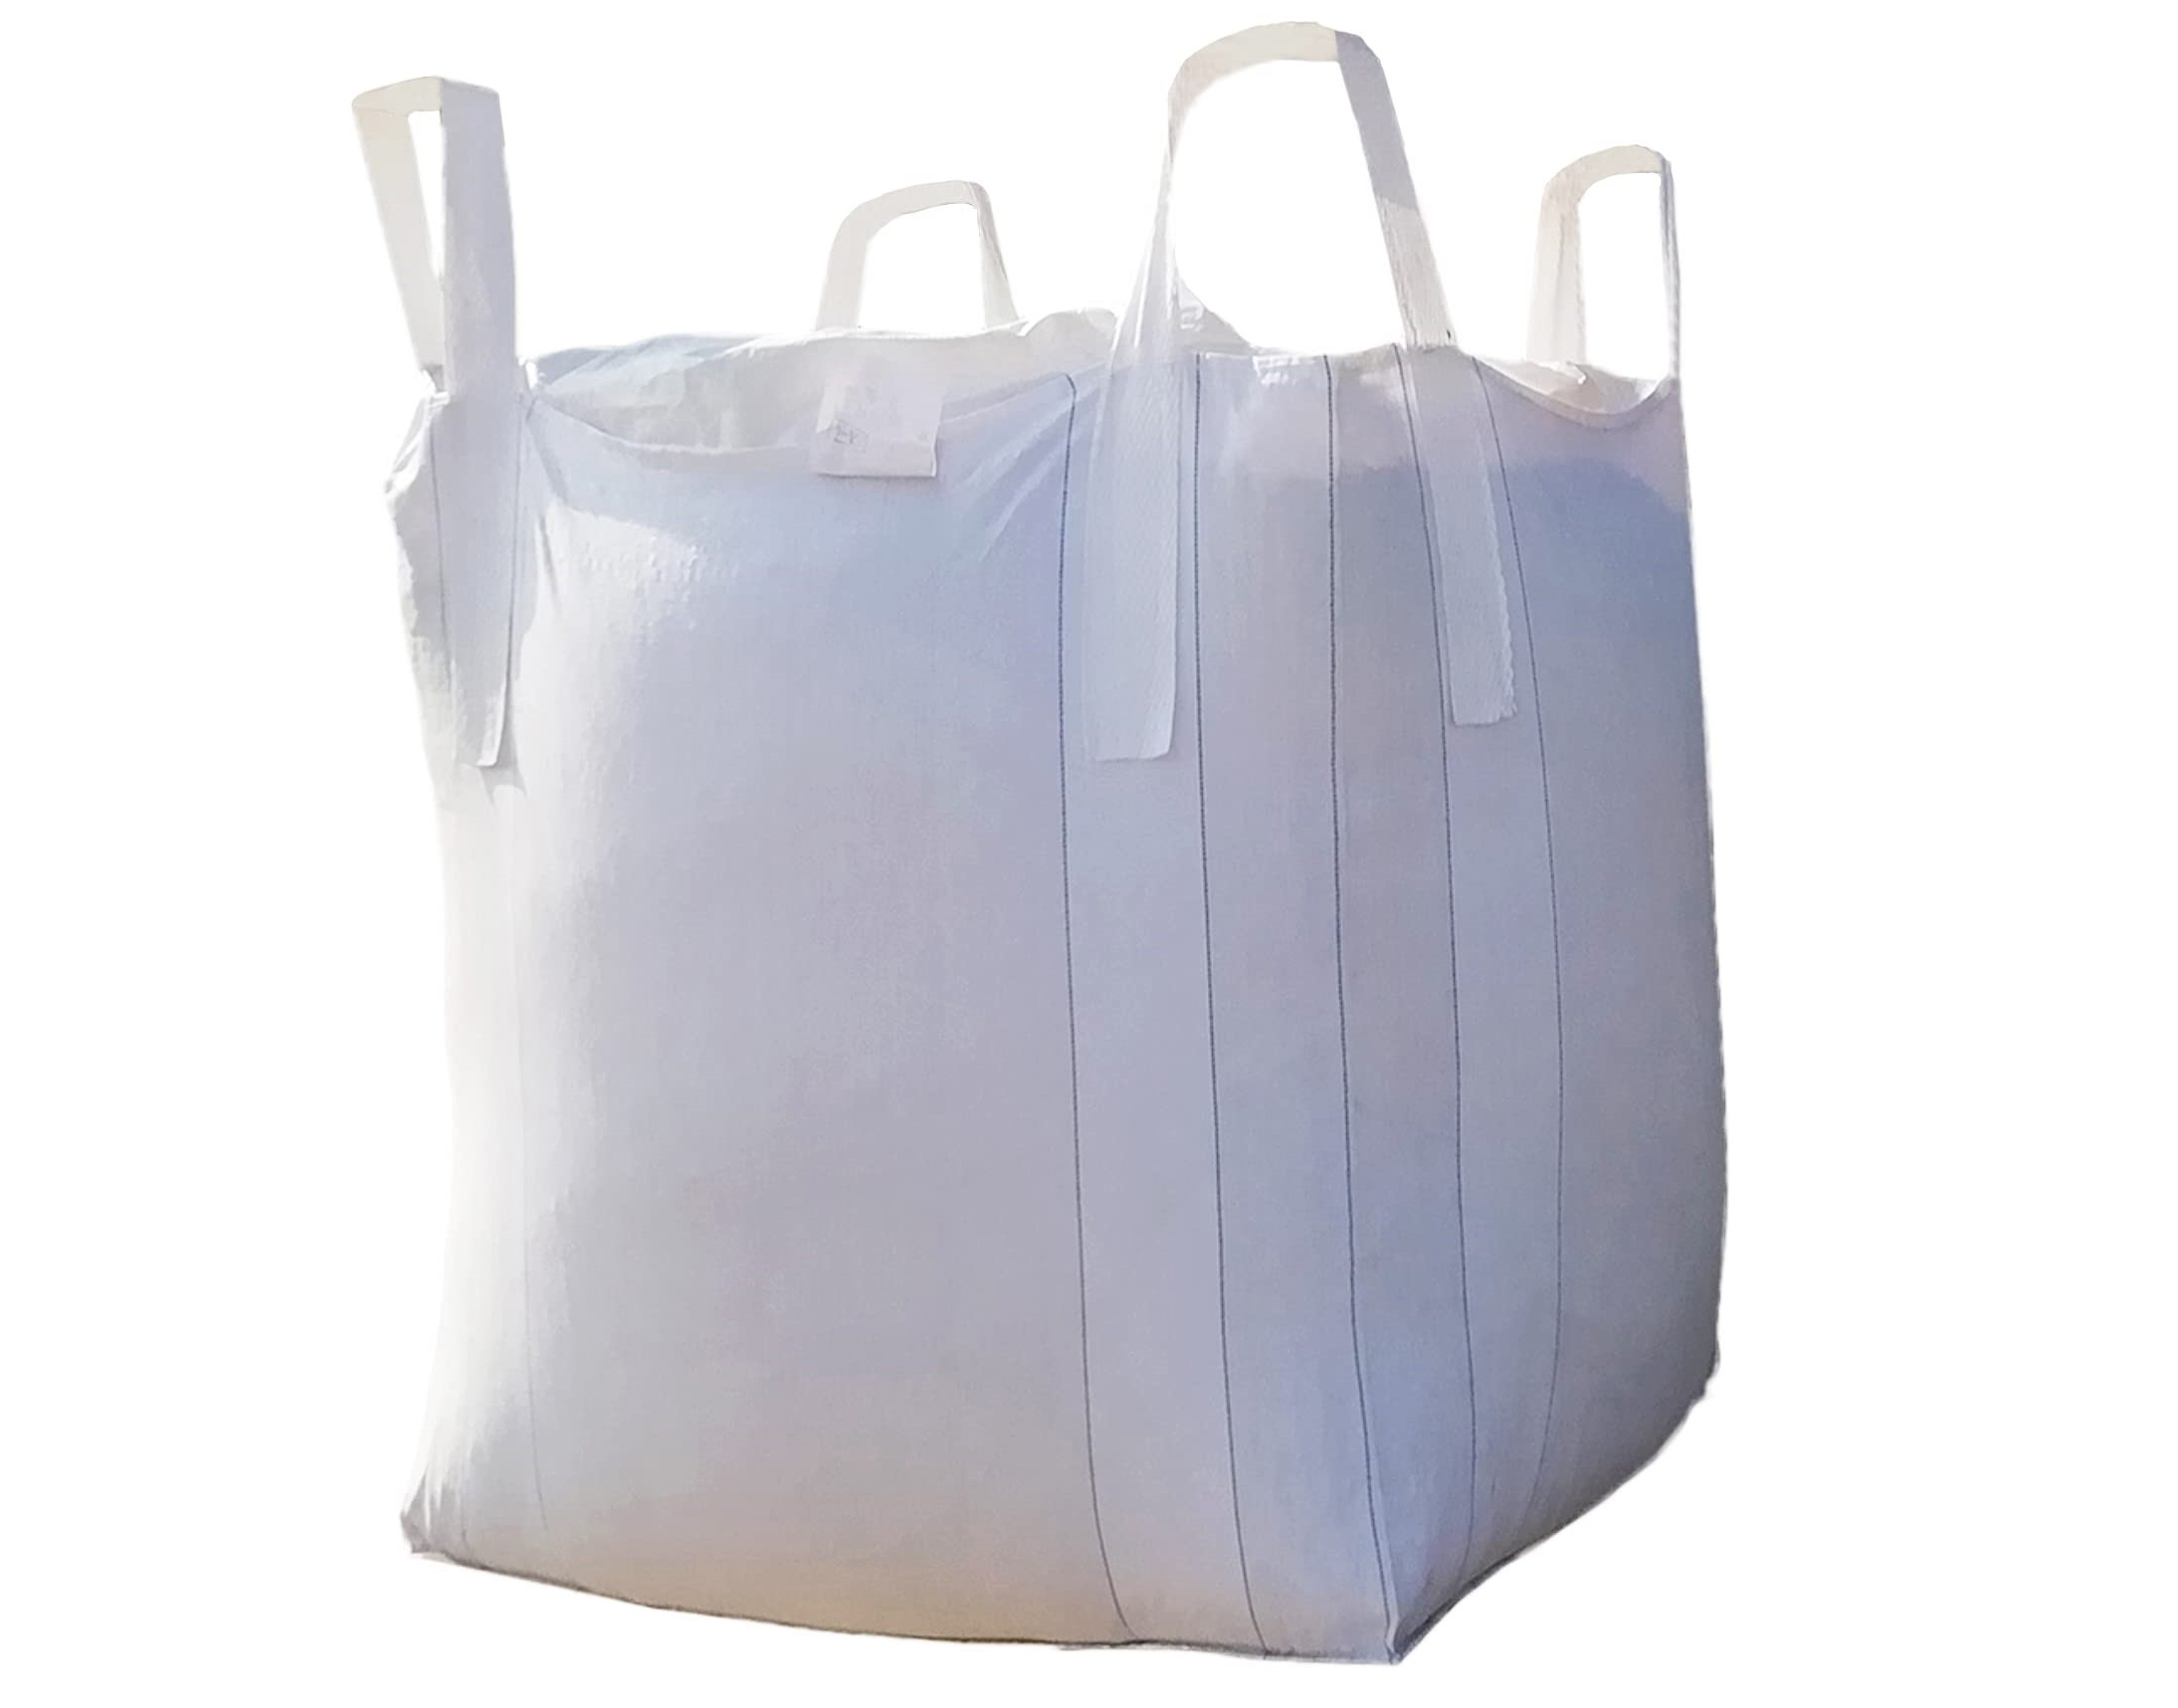 a large white sack